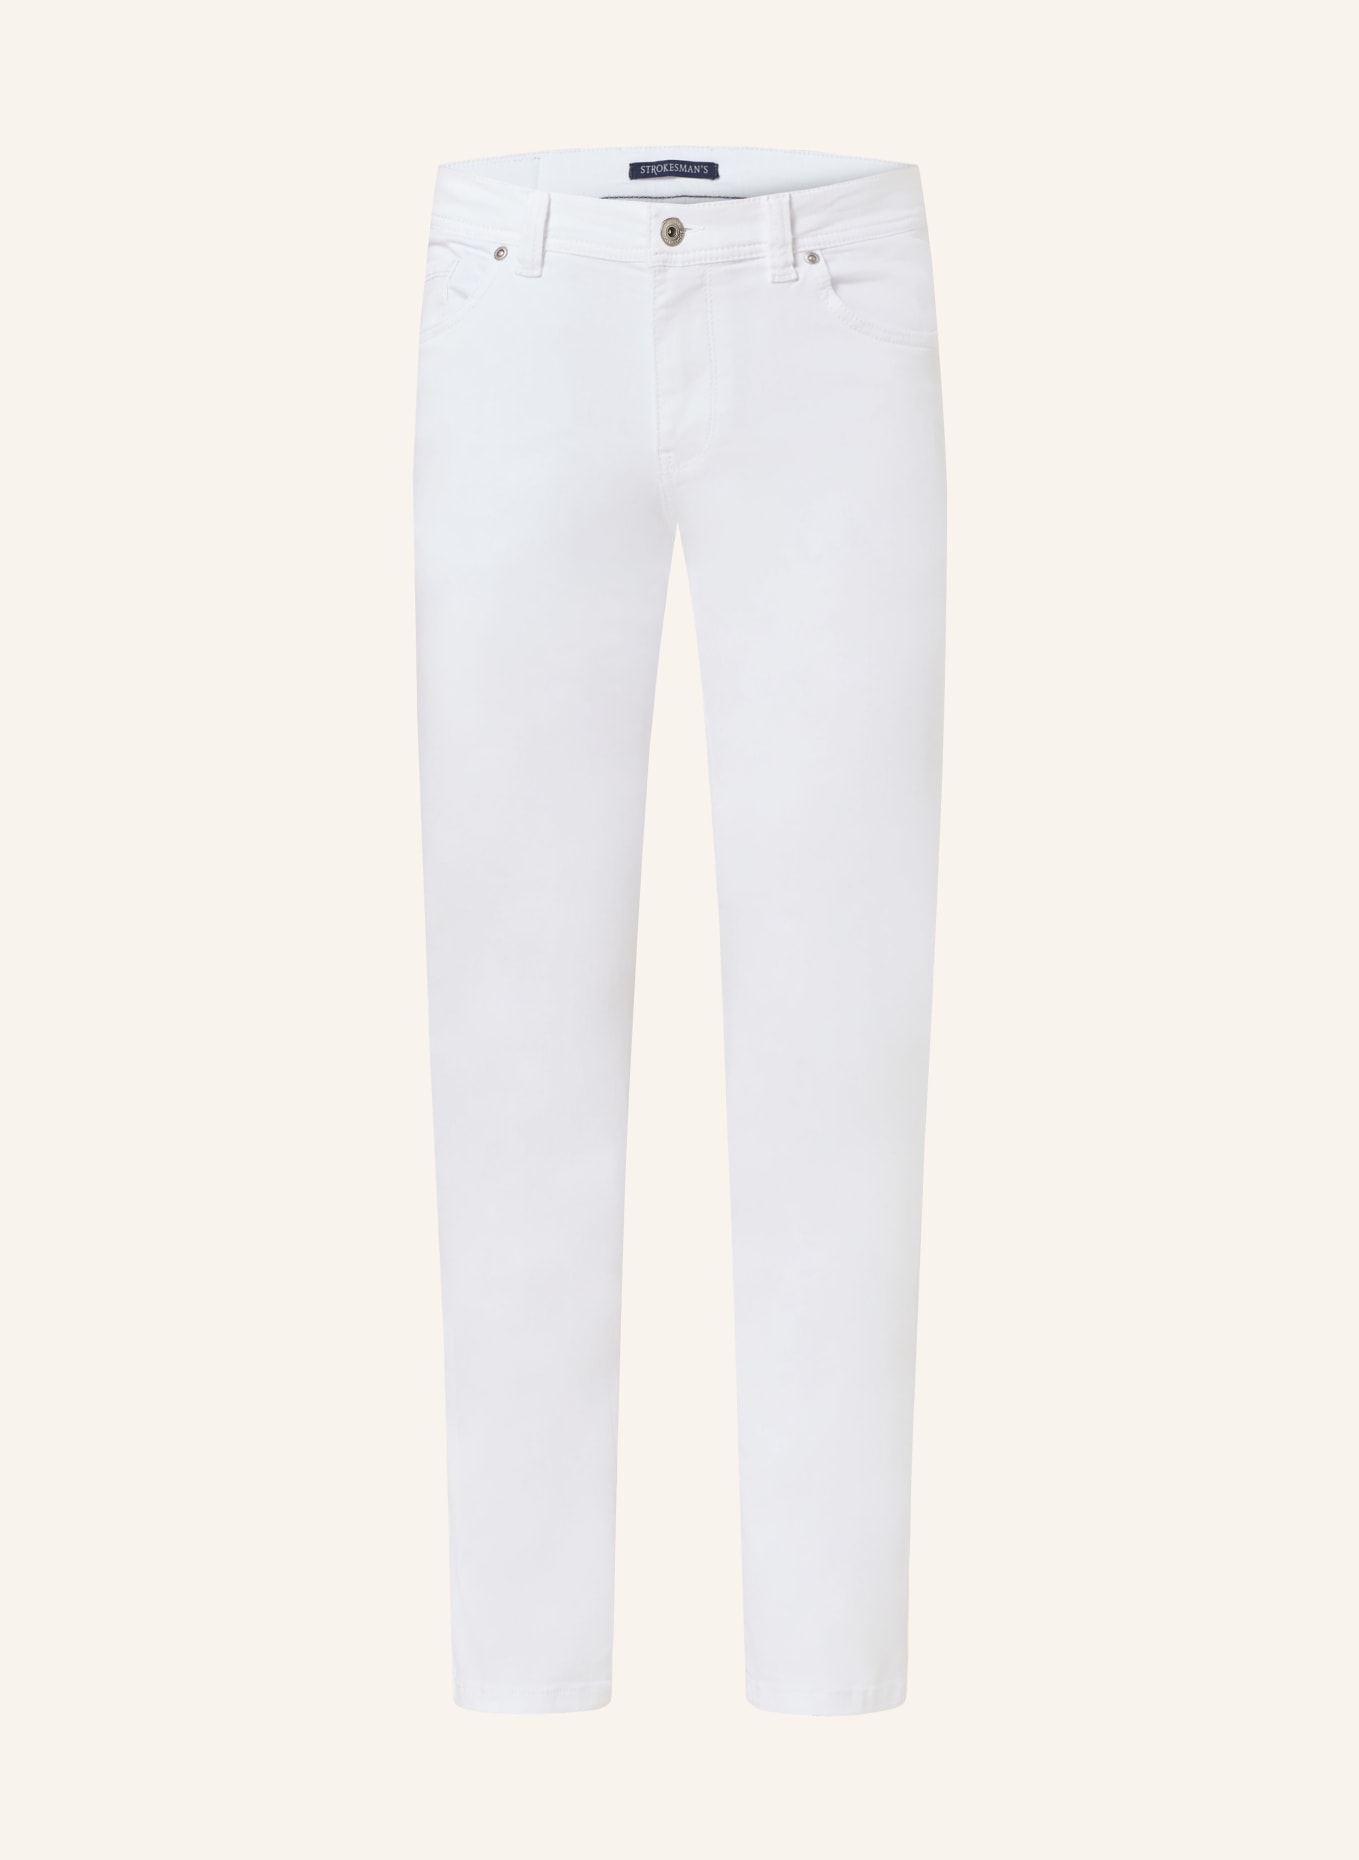 STROKESMAN'S Jeans Slim Fit, Farbe: 0132 white (Bild 1)